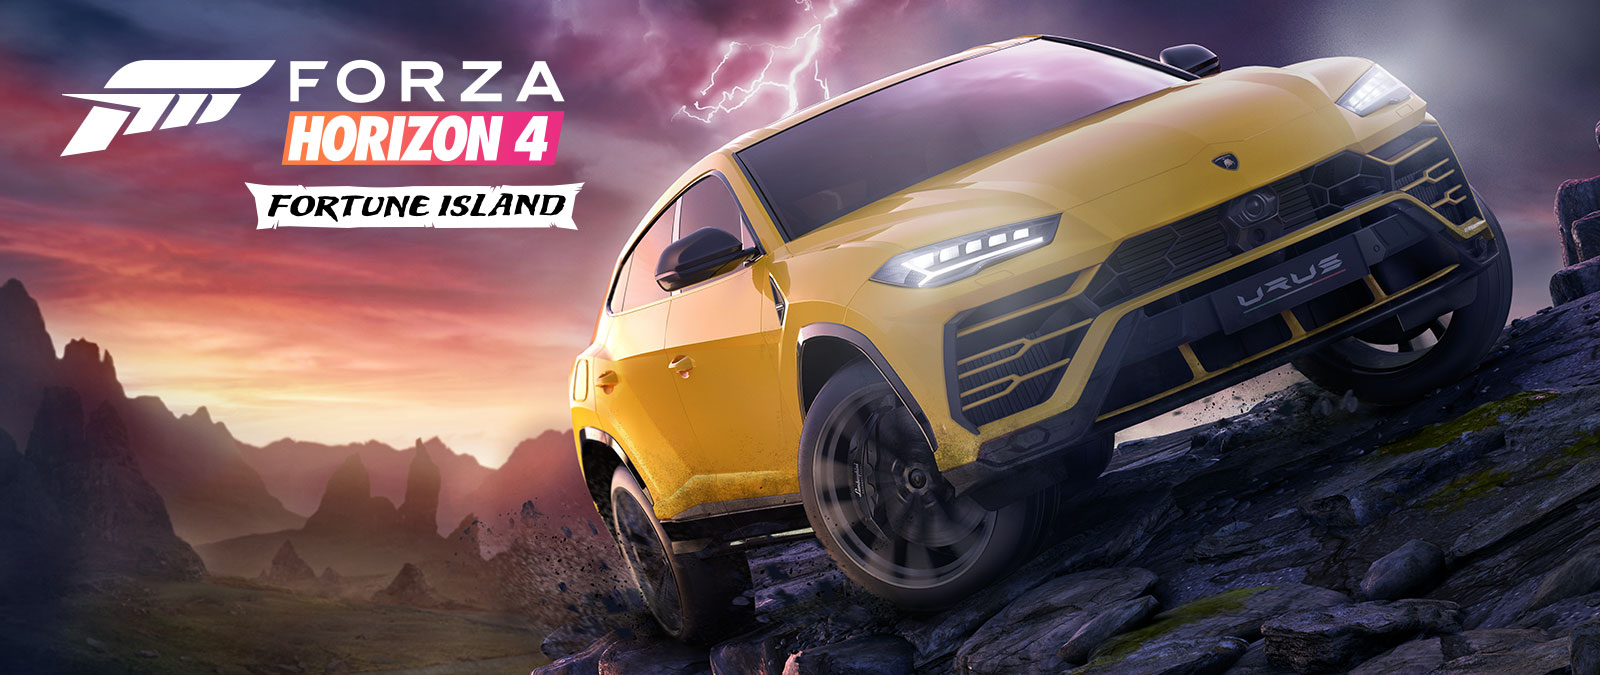 Forza Horizon 4 Fortune Island, a Yellow Lamborghini Urus drives of treacherous terrain with lightning in the background